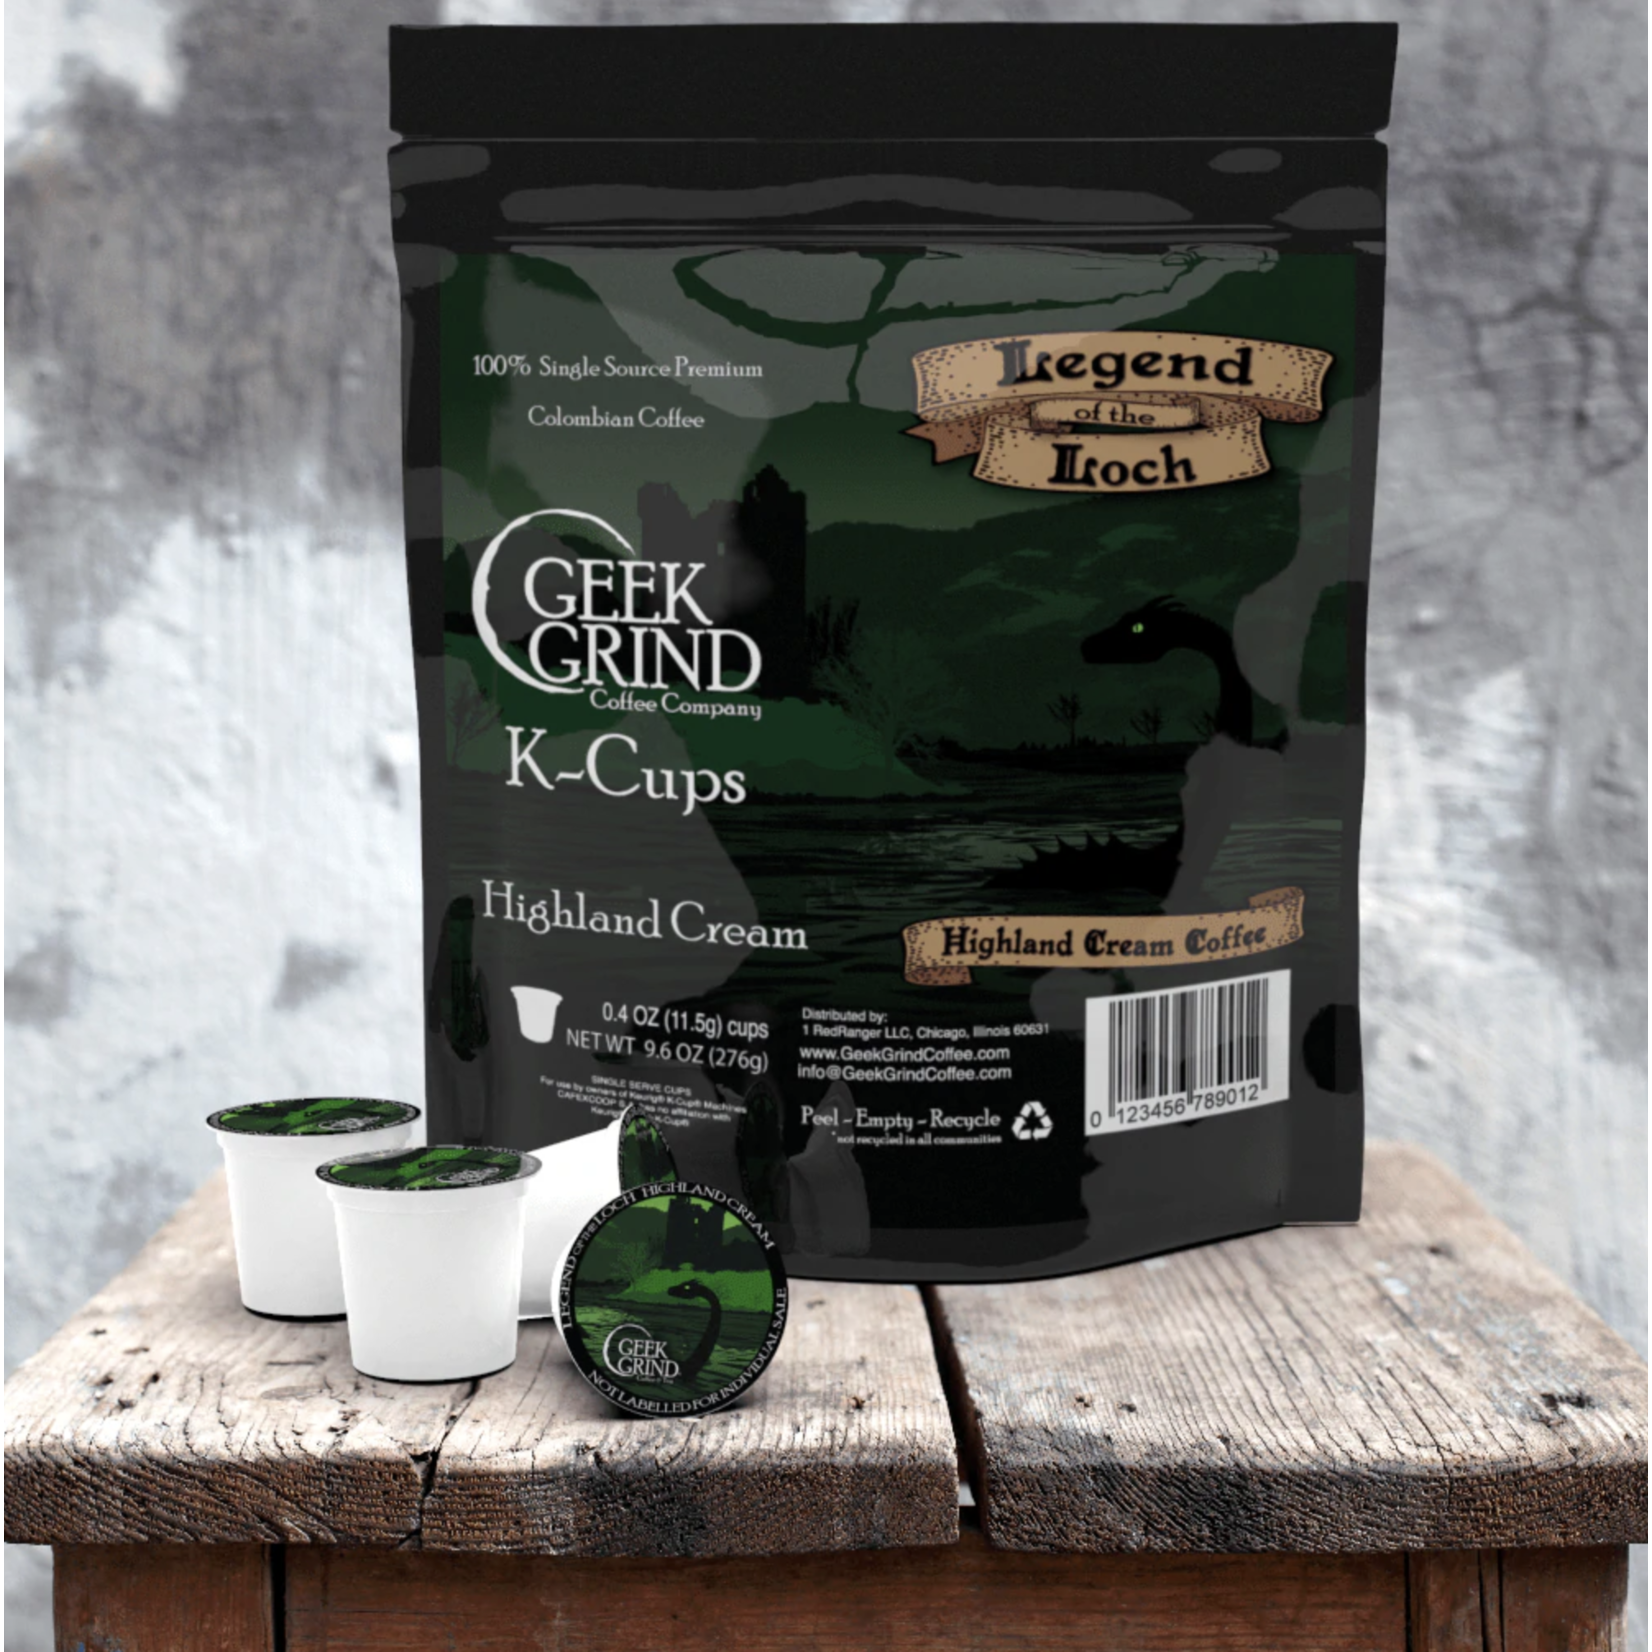 Geek Grind Legend of the Loch - Highland Cream Flavored Coffee